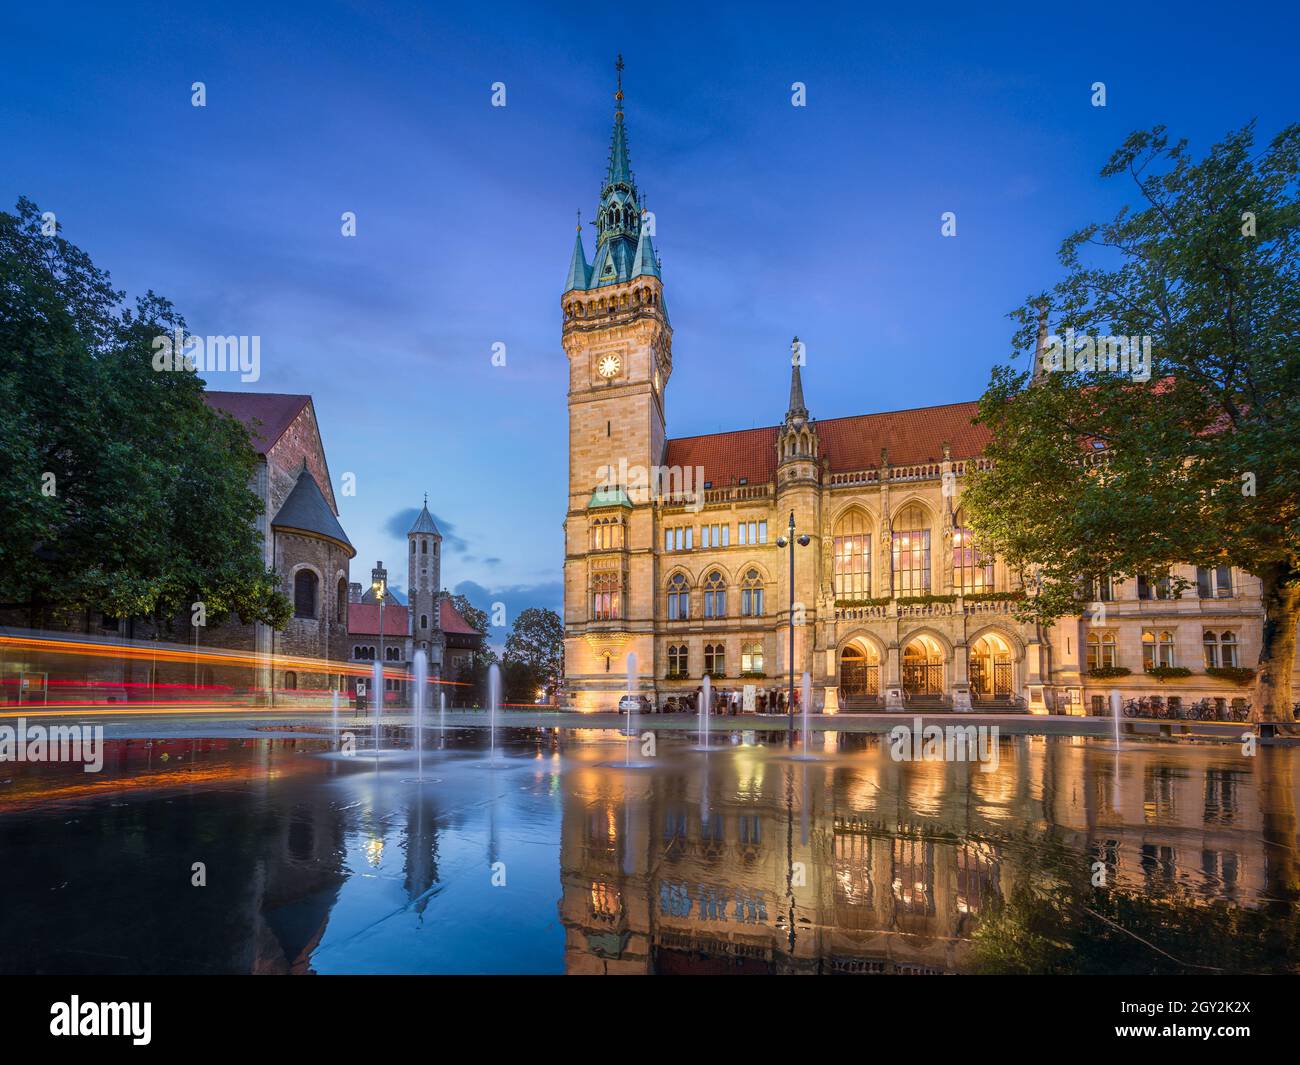 Town Hall of Brunswick (Braunschweig), Germany at night Stock Photo